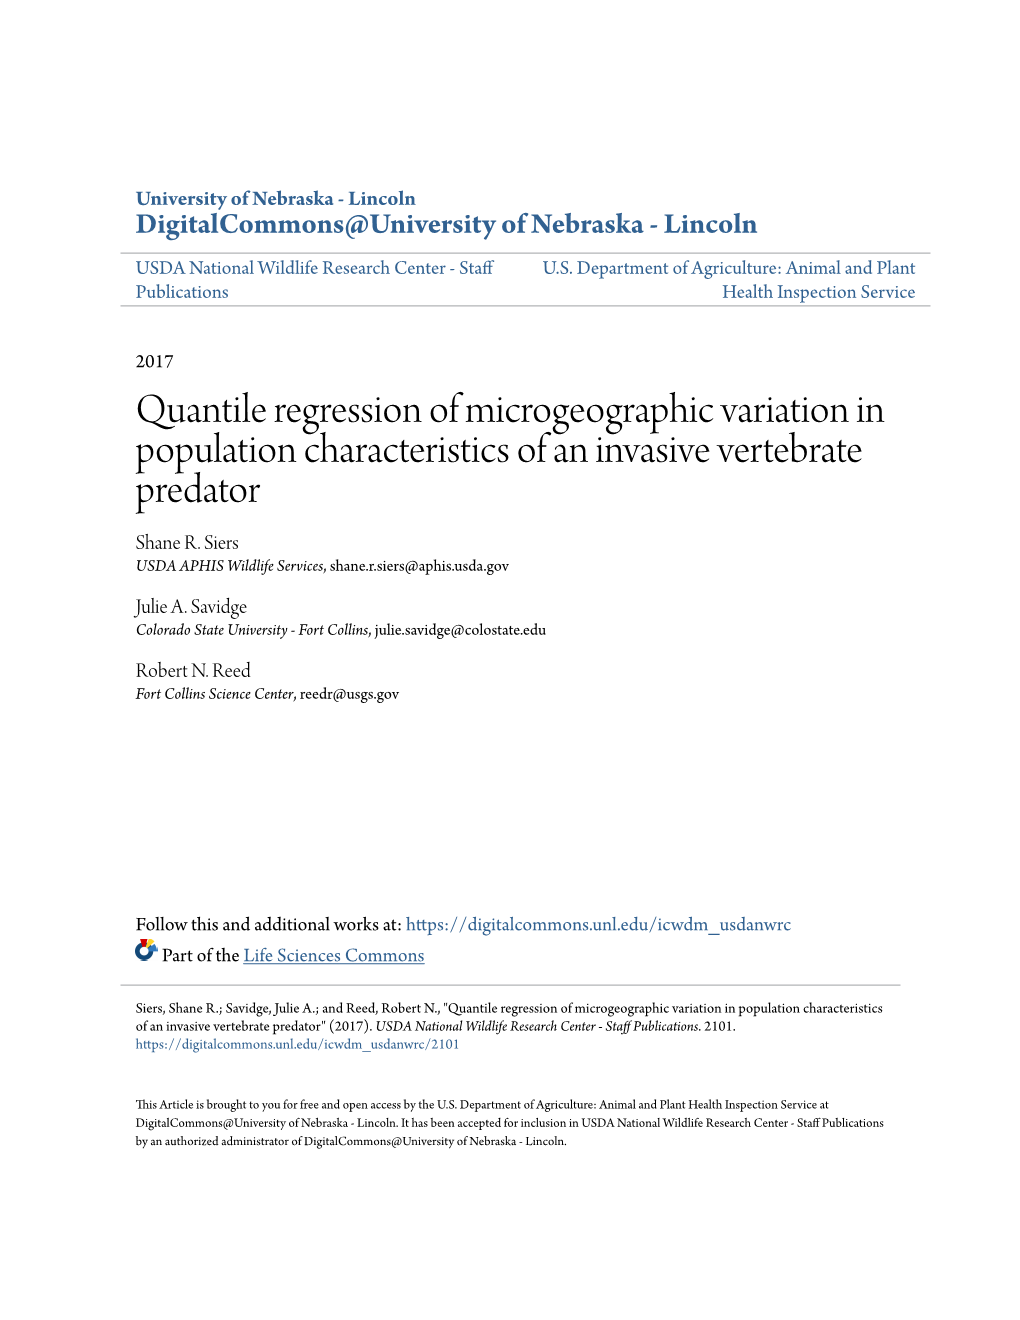 Quantile Regression of Microgeographic Variation in Population Characteristics of an Invasive Vertebrate Predator Shane R